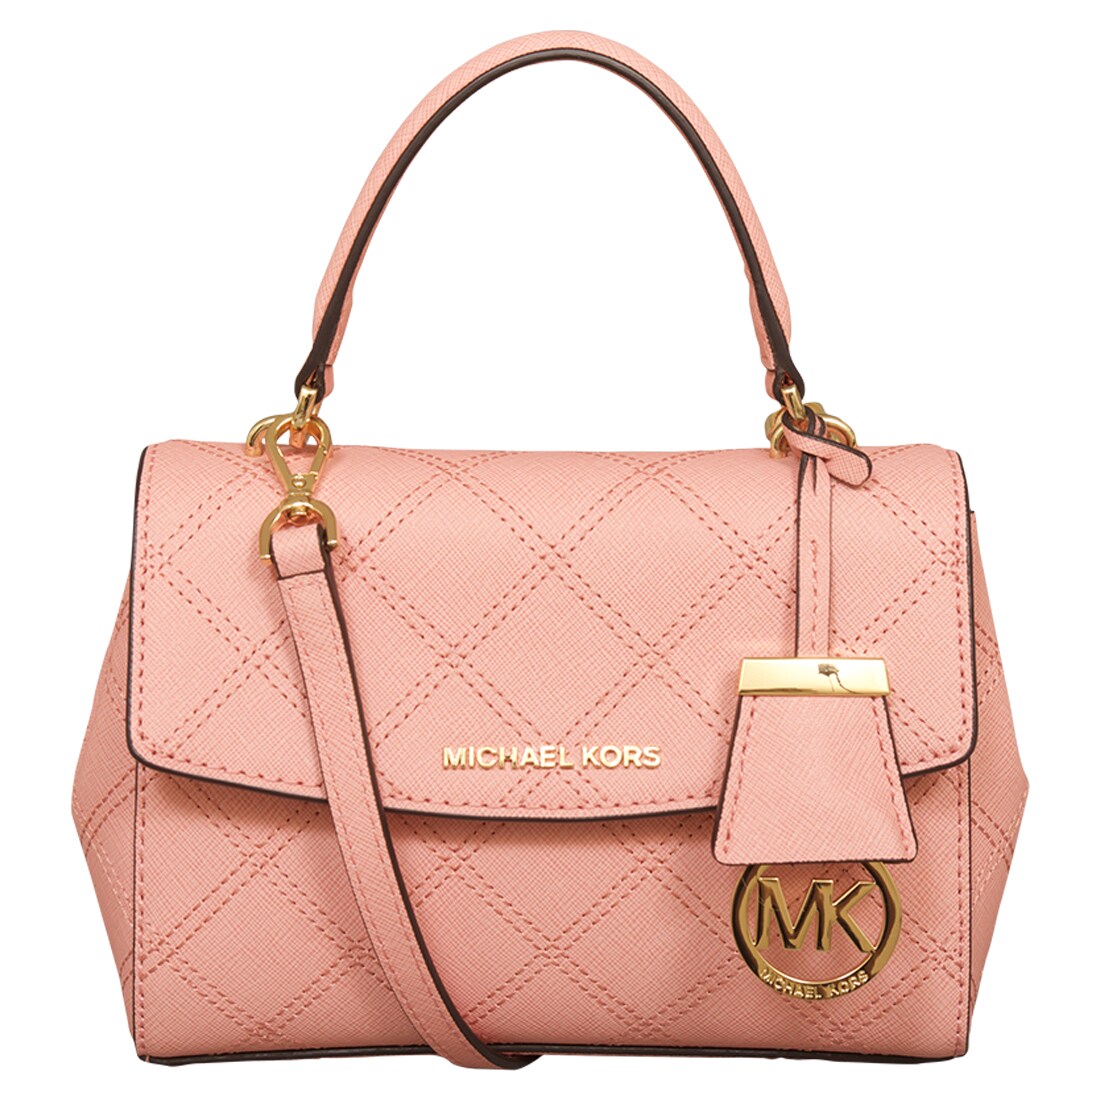 michael kors light pink crossbody purse